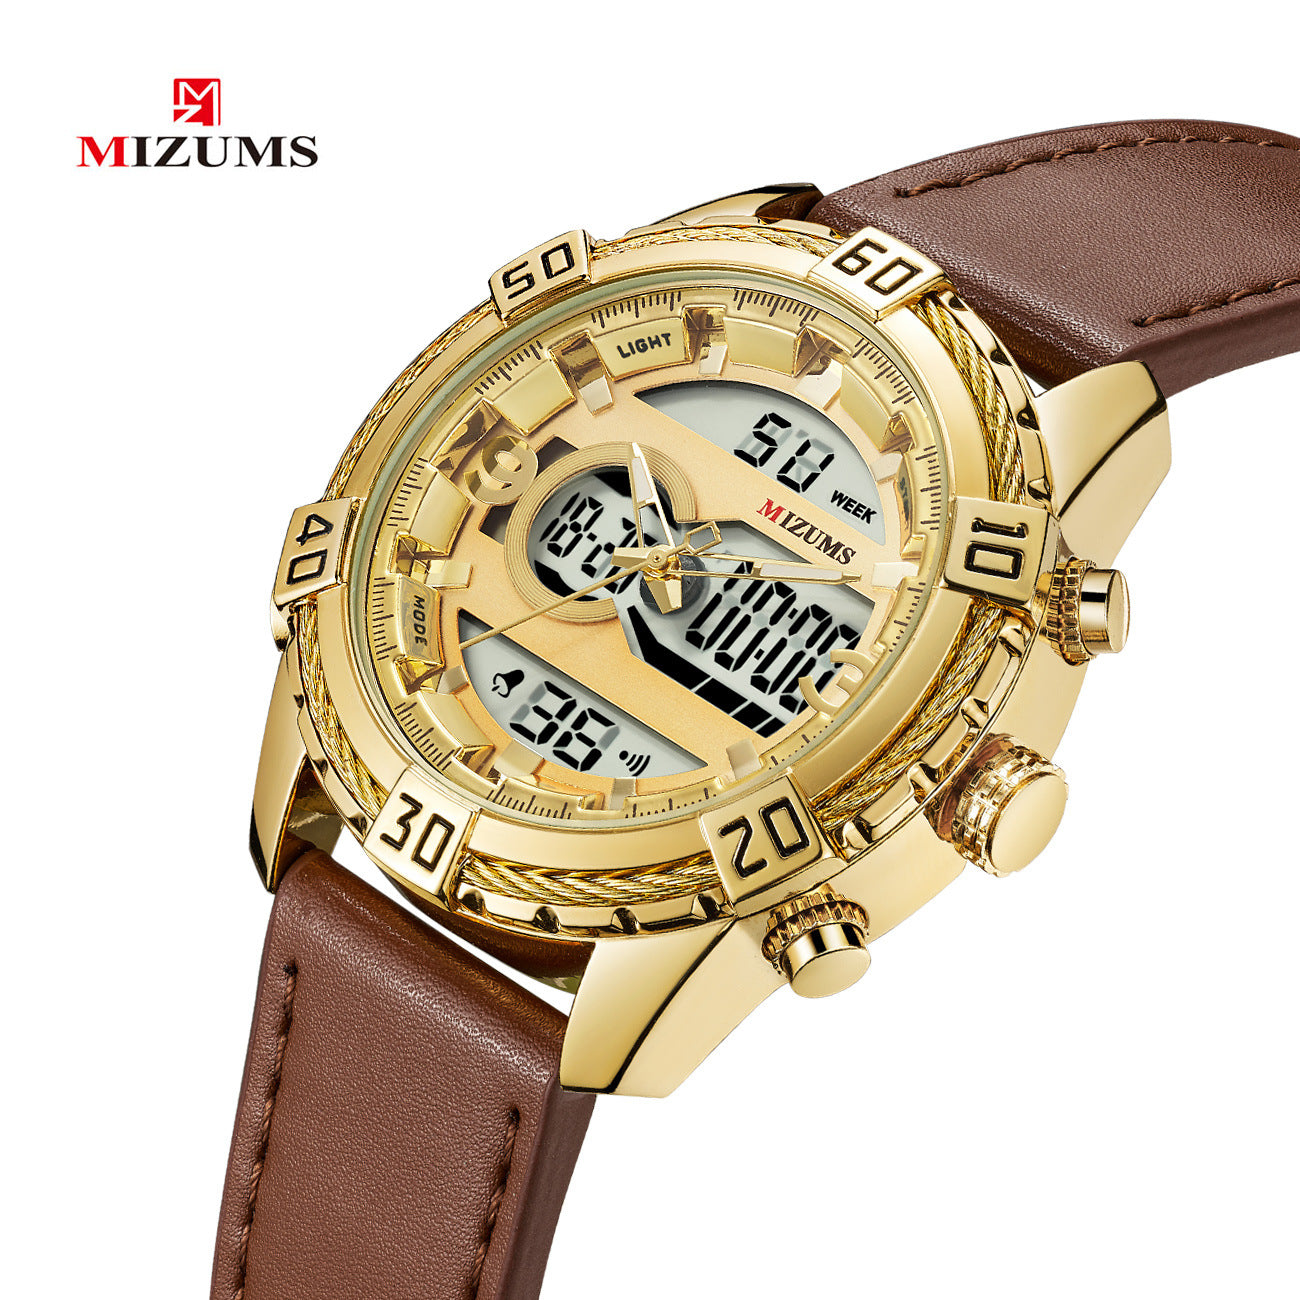 Mizums New 8023 Men's Watch Belt Watch Sports Men's Watch Double Inserts Belt Men's Watch